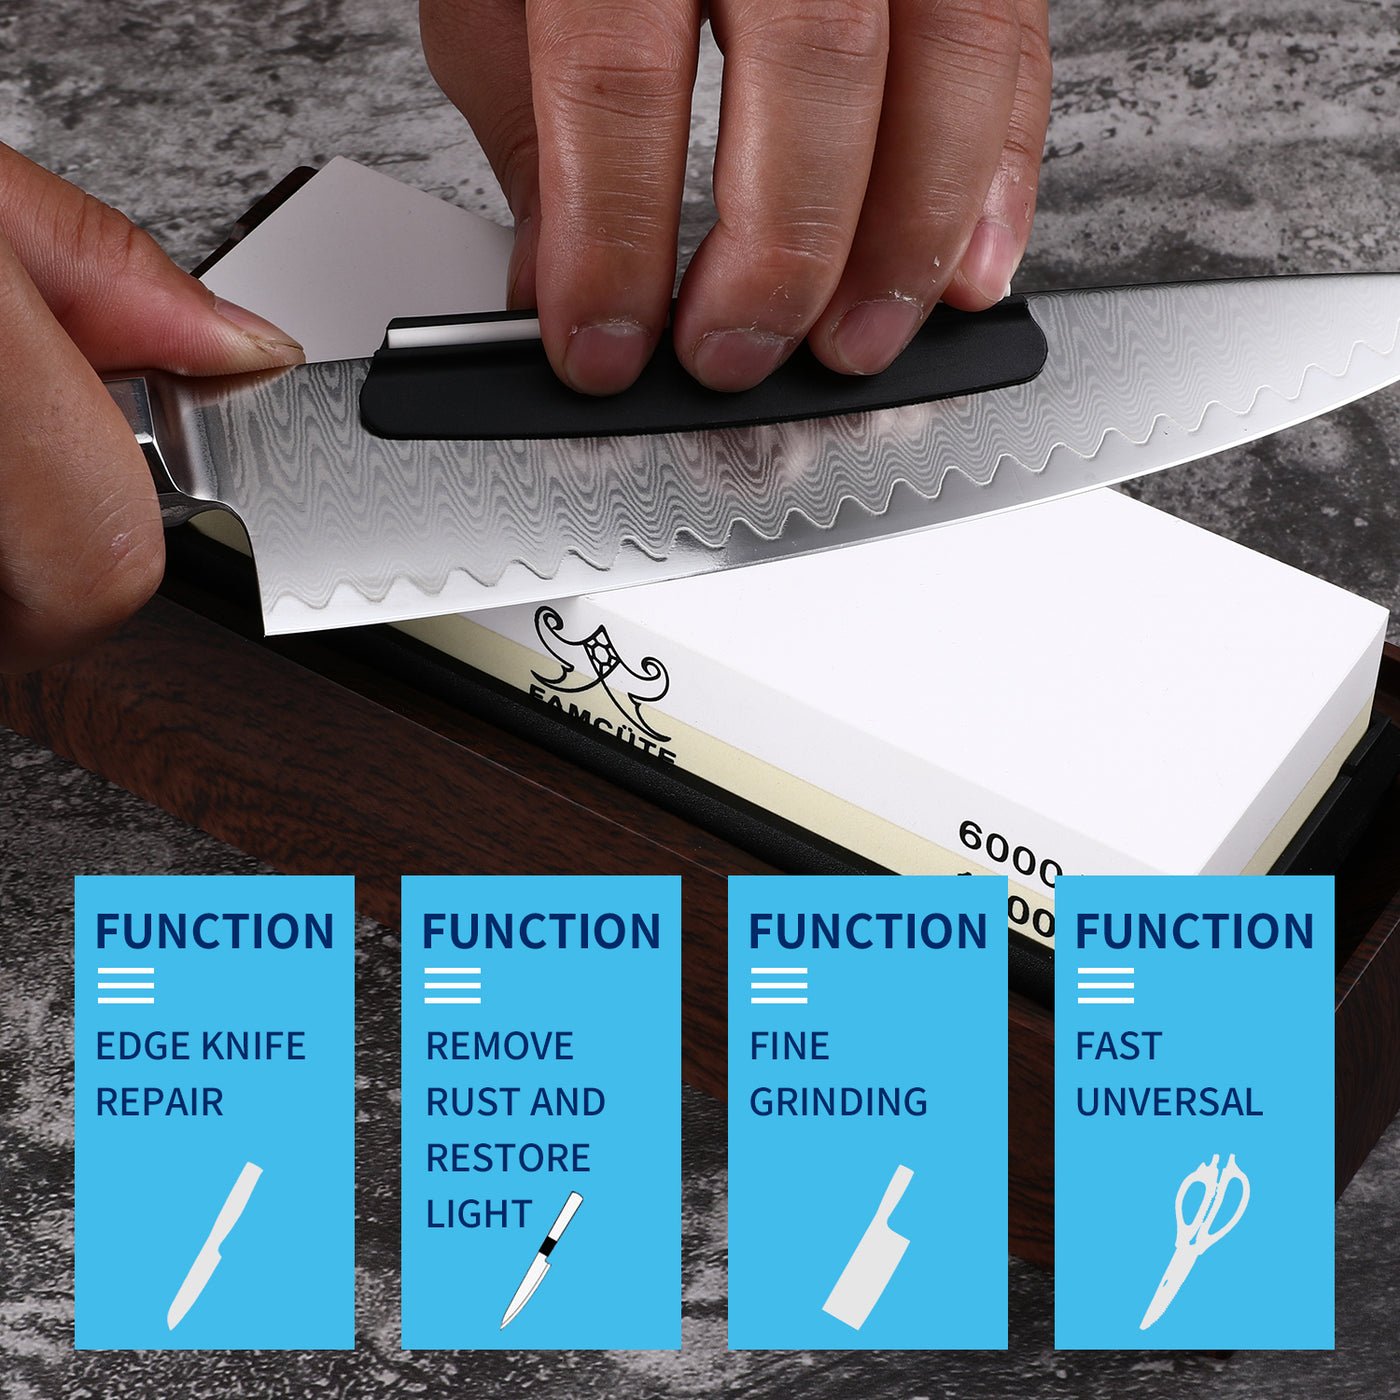 TAIDEA Whetstone Angle guide Kitchen knife sharpener white alundum Fast sharpening  stone 240-8000grit